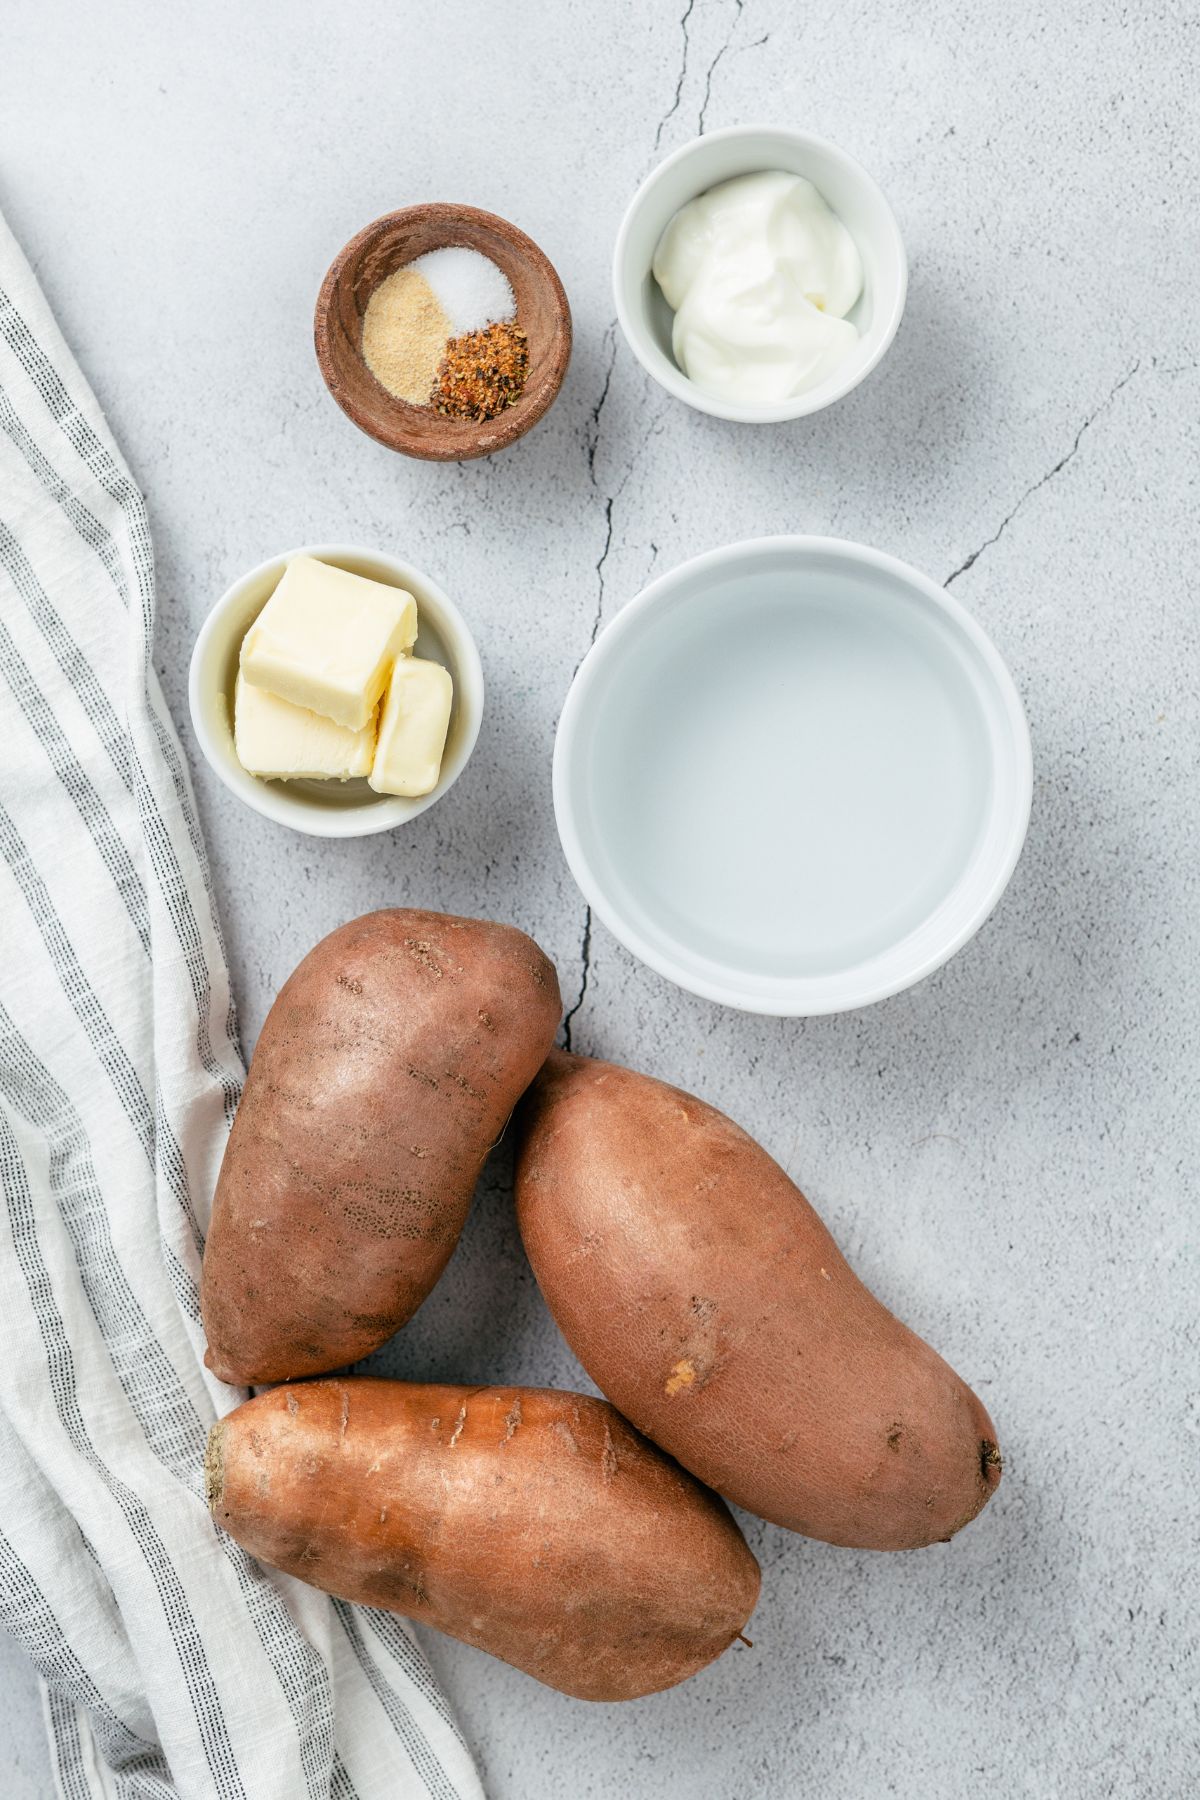 ingredients needed to make savory mashed sweet potatoes: sweet potatoes, water, butter, garlic powder, herb sprinkle seasoning, sea salt, and sour cream in separate bowls